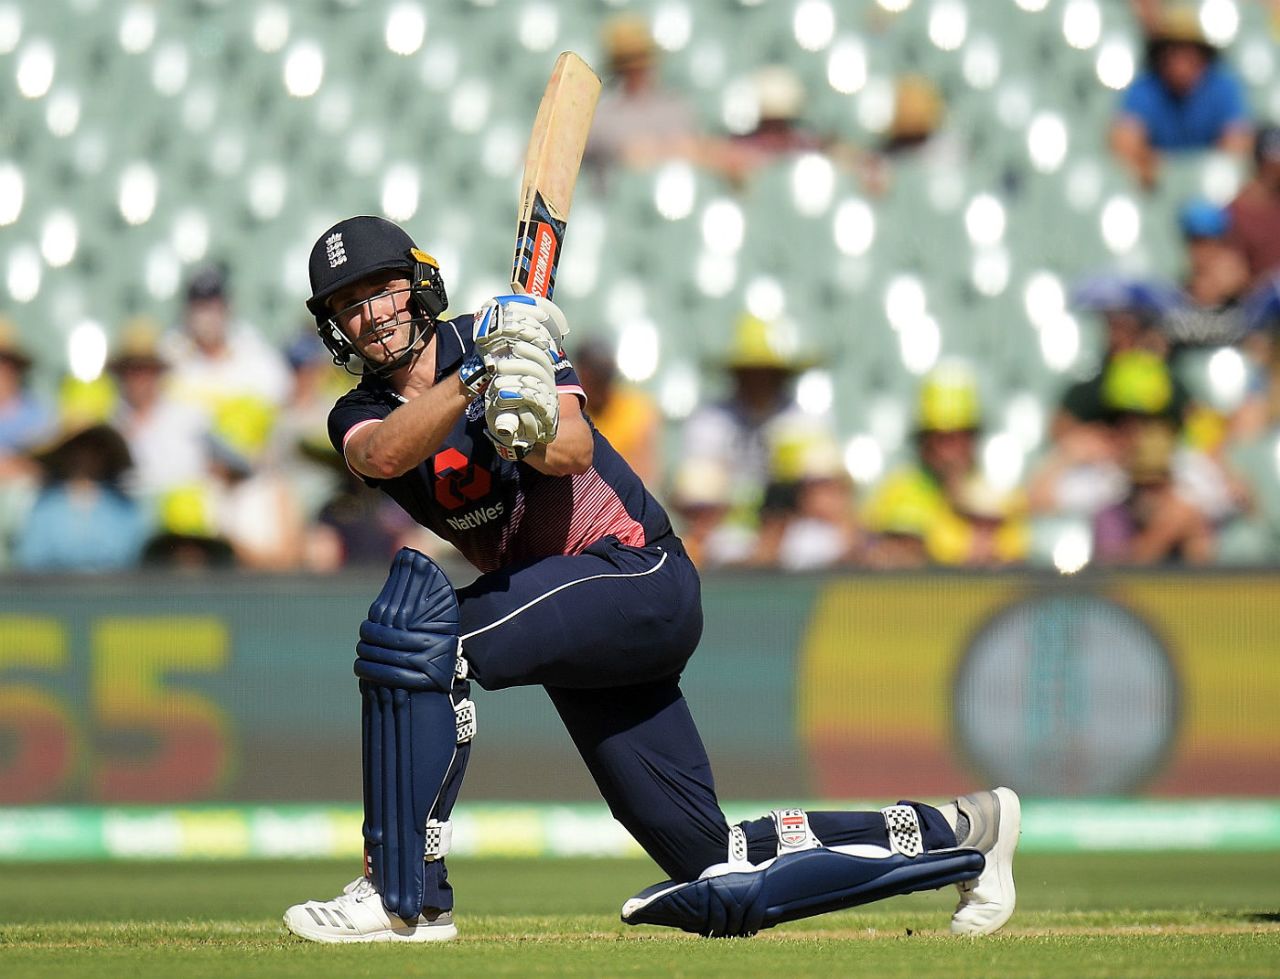 Chris Woakes made a battling 78 to revive England at Adelaide, Australia v England, 4th ODI, Adelaide, January 26, 2018